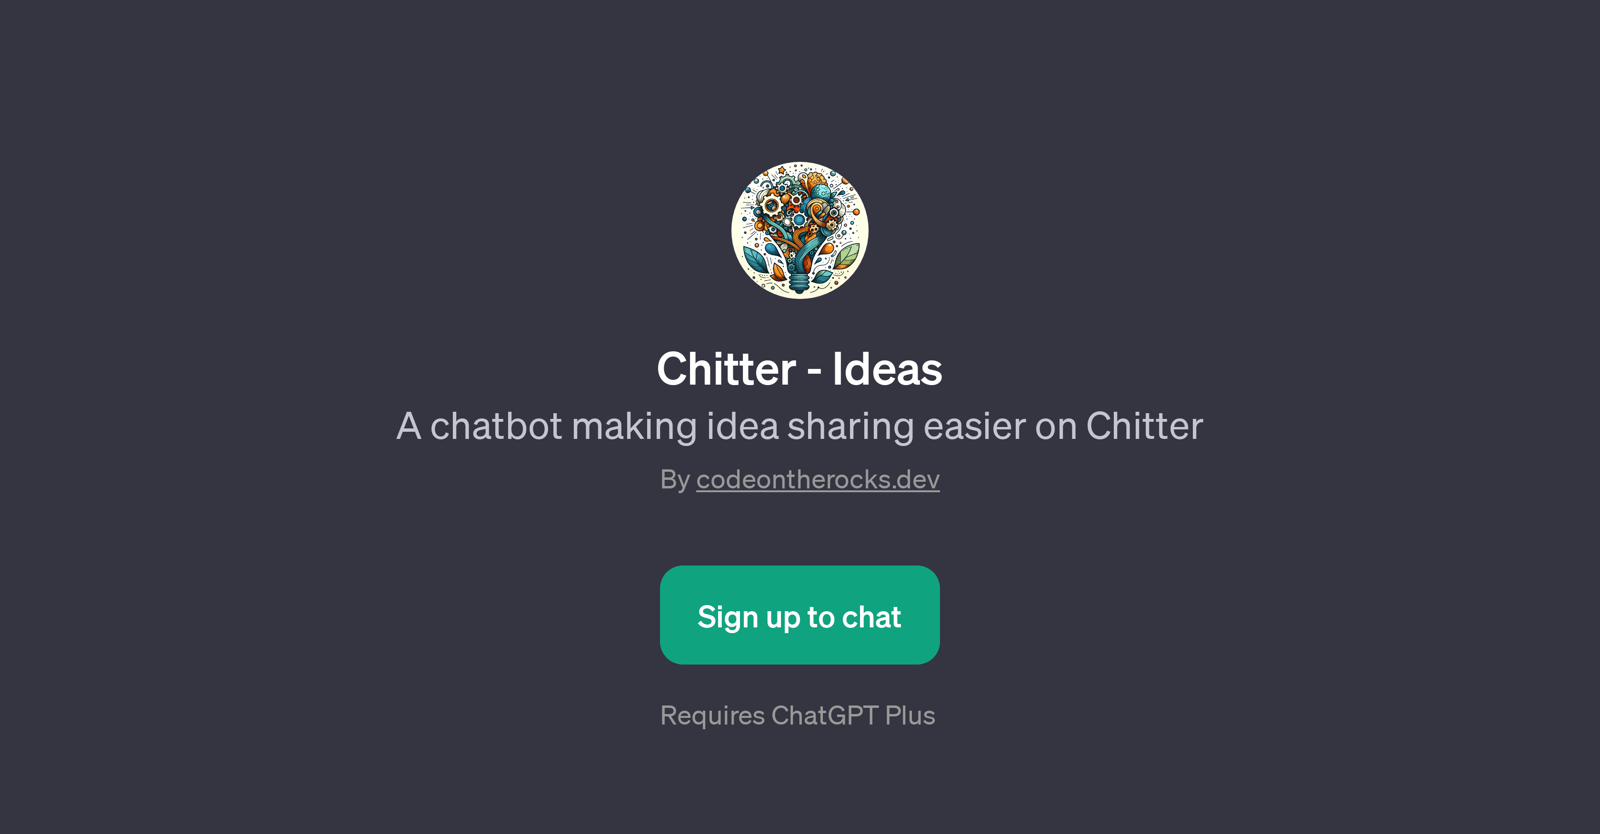 Chitter - Ideas website